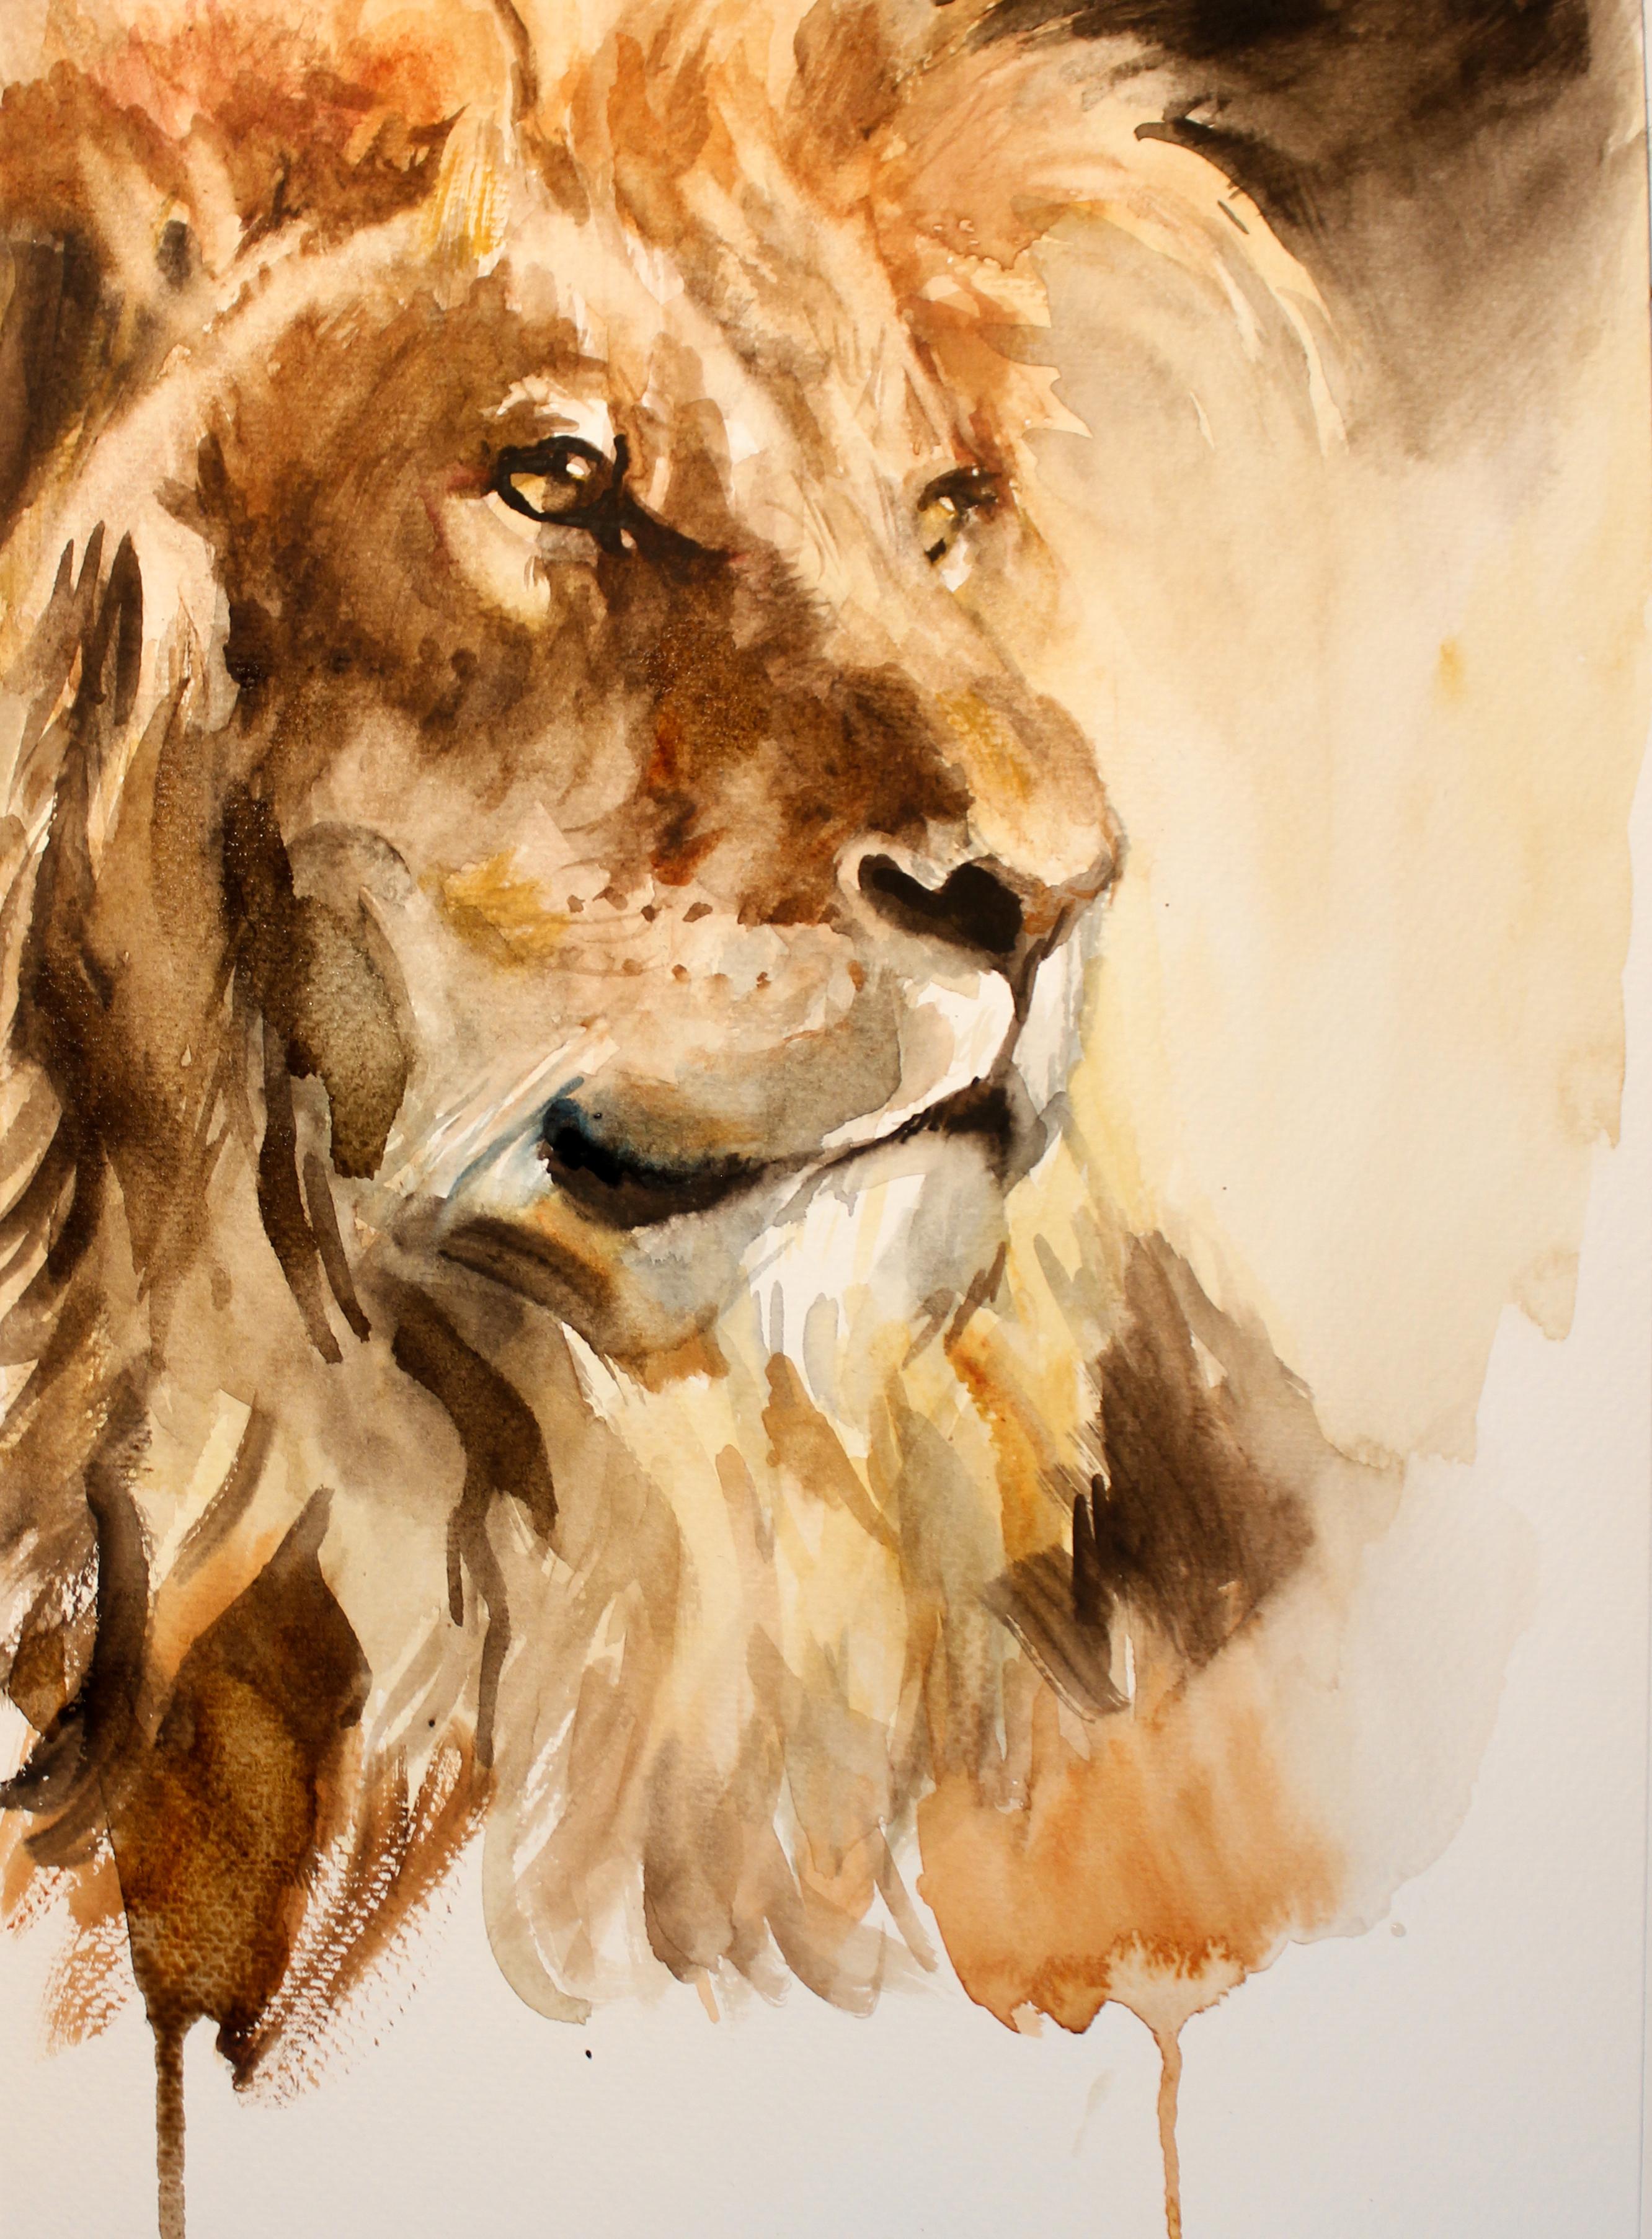 Michele Bajona Animal Art - "Lion" Watercolor Painting